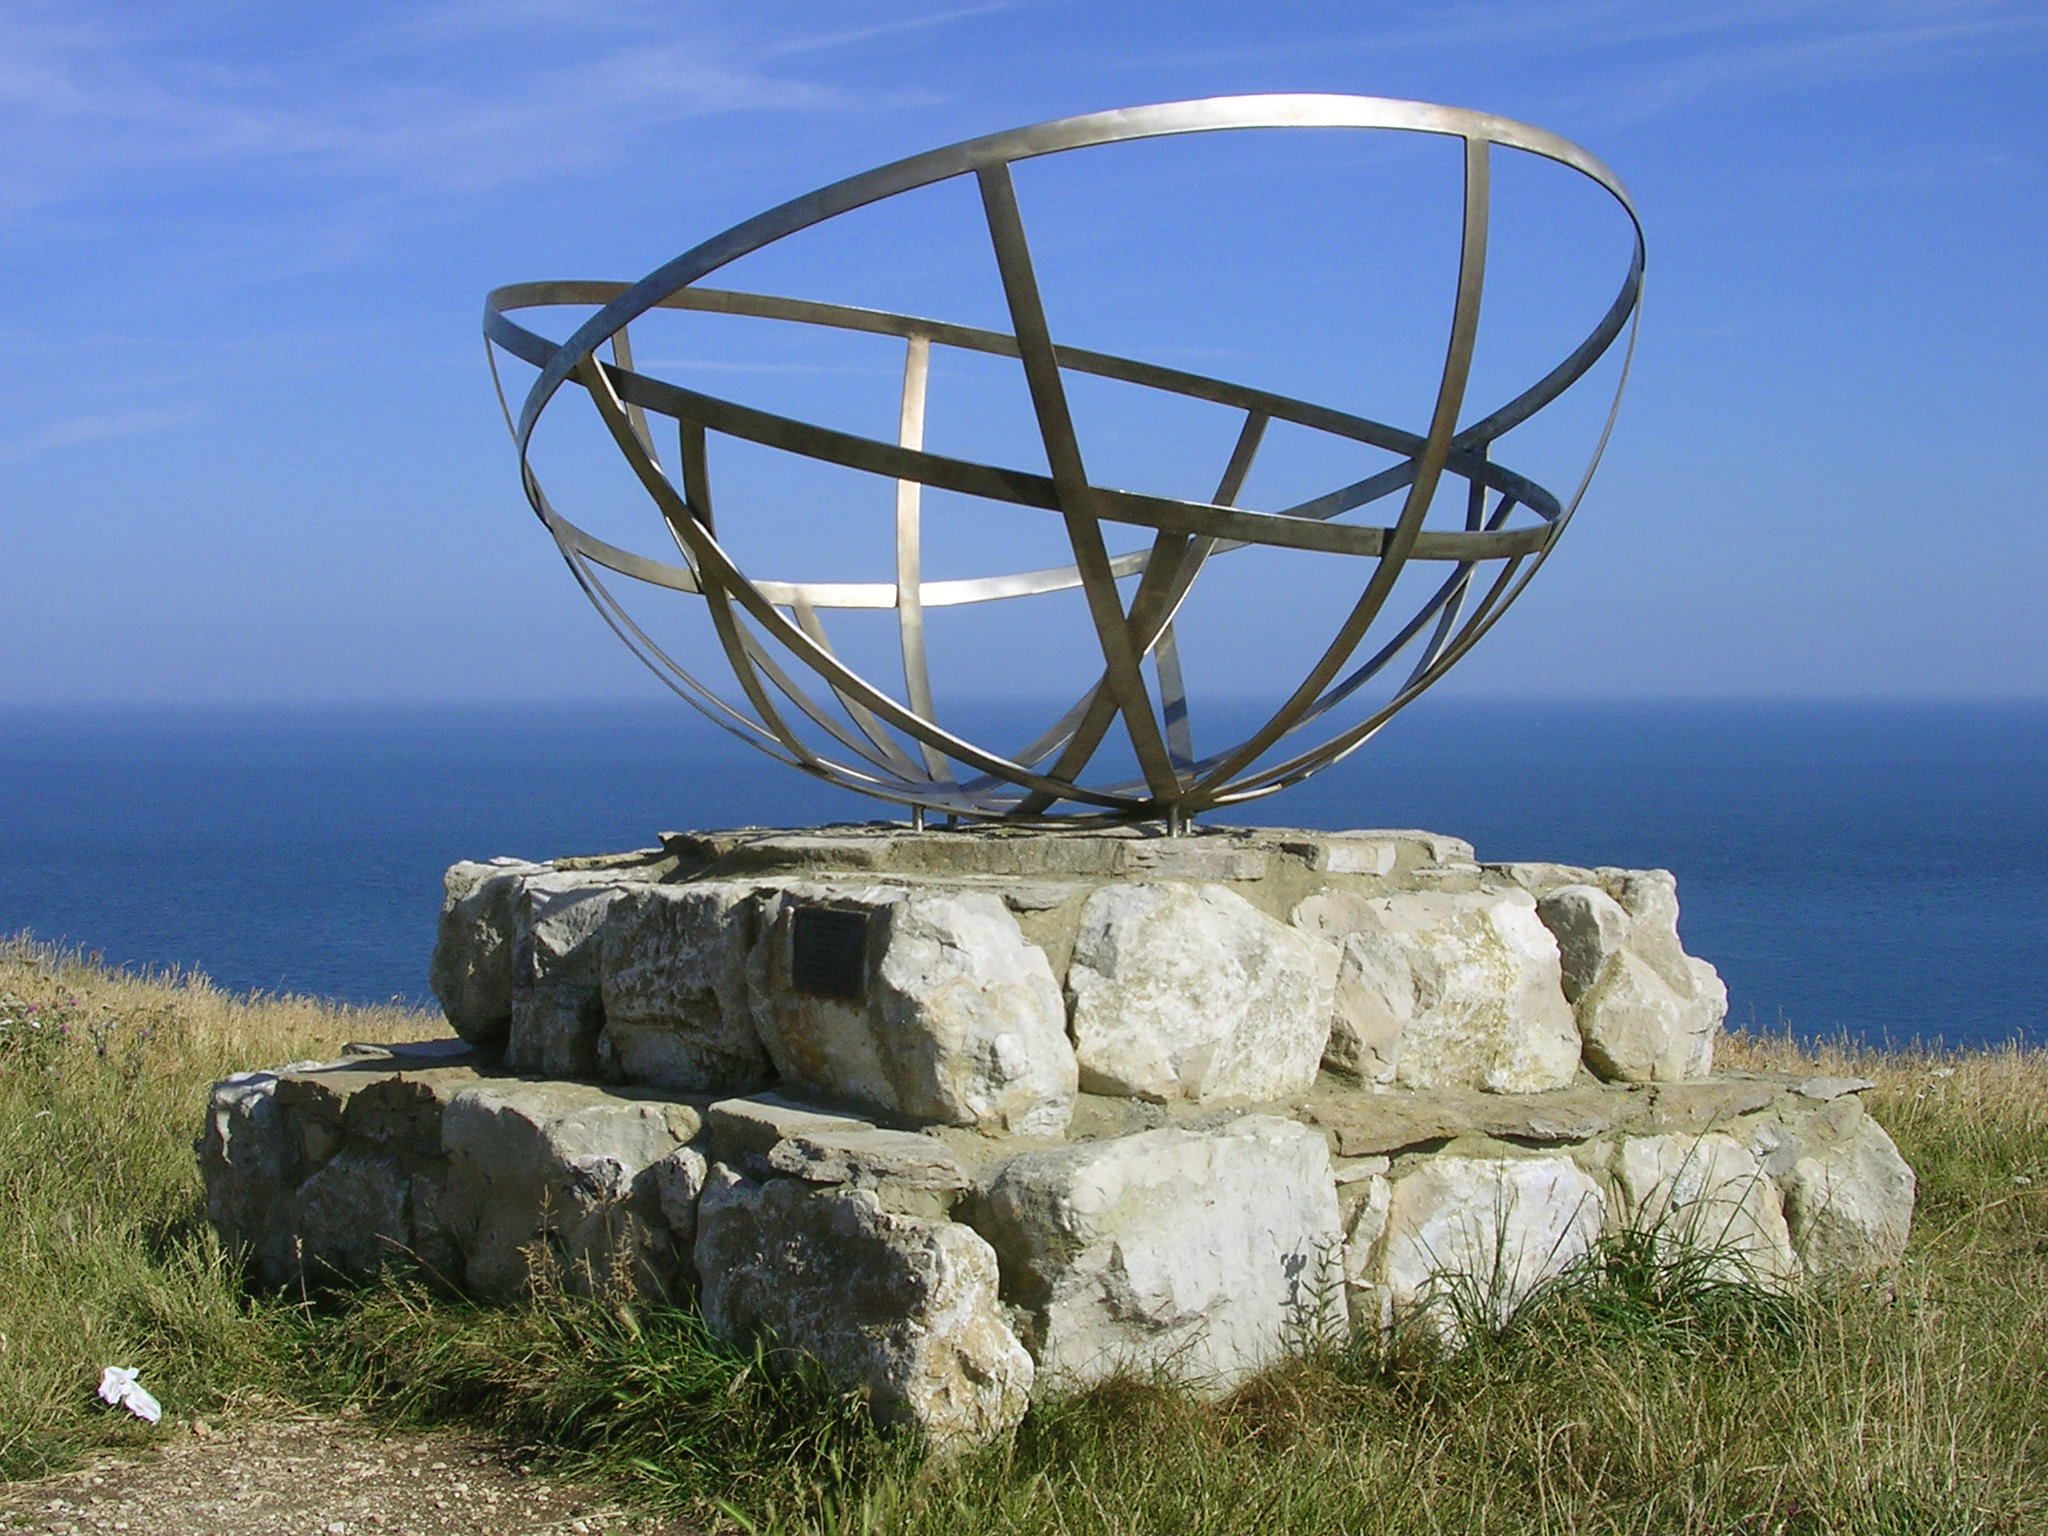 https://upload.wikimedia.org/wikipedia/commons/9/92/St_albans_head_radar_memorial.jpg